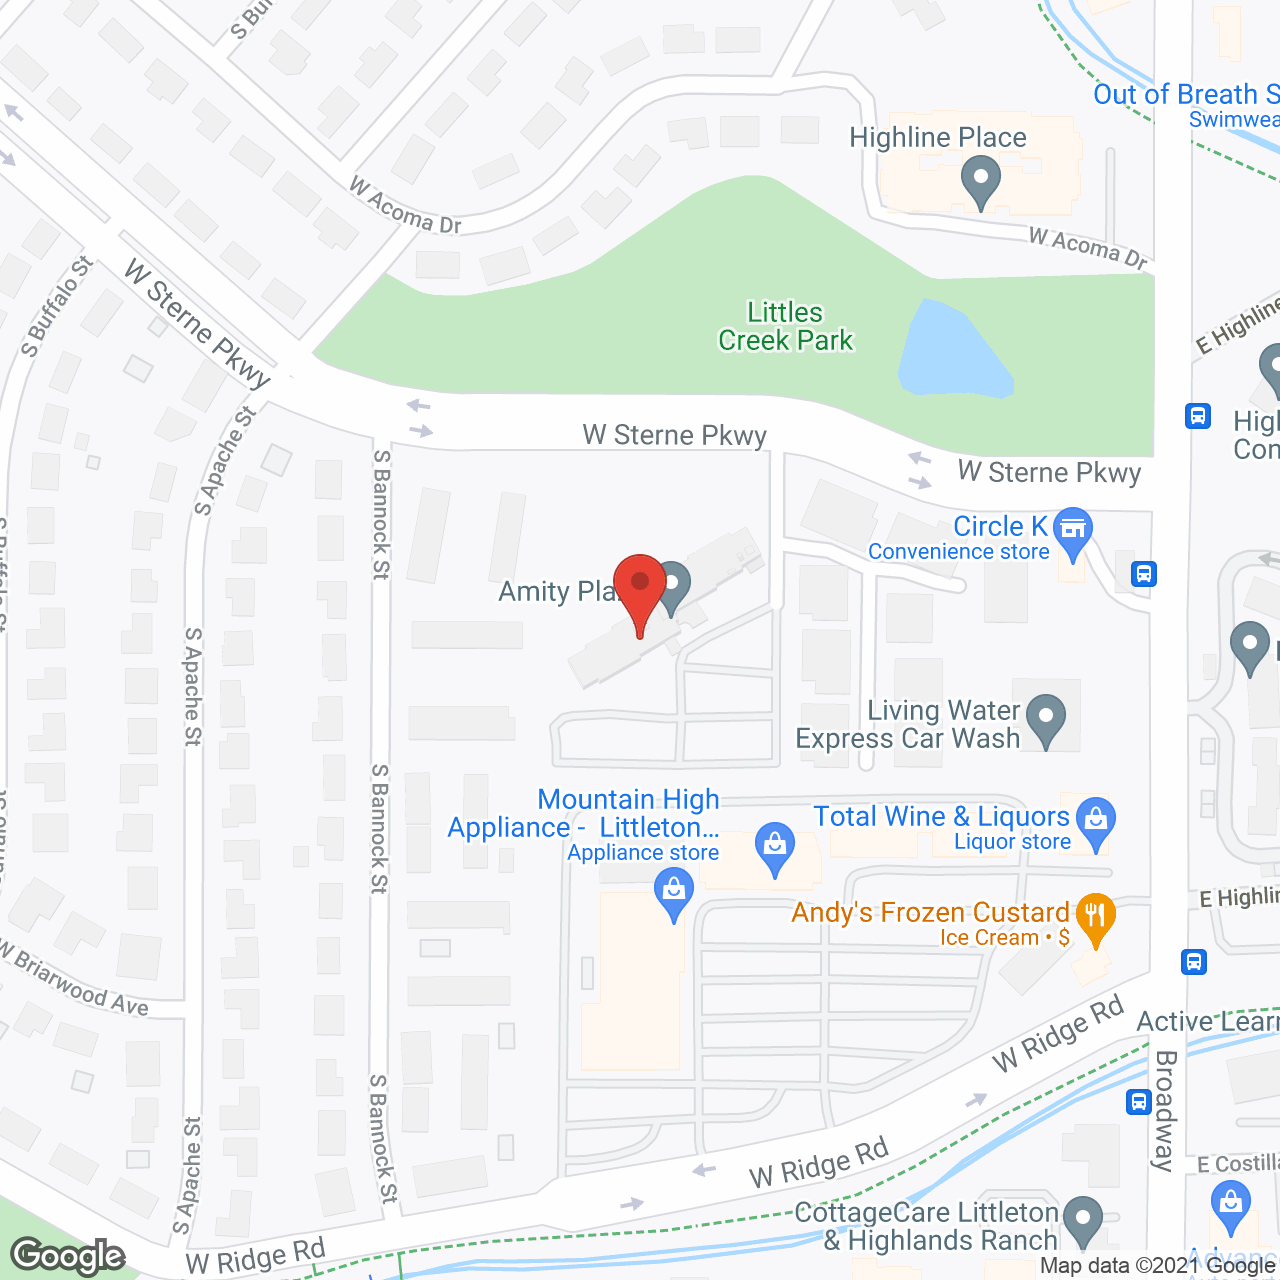 Amity Plaza in google map